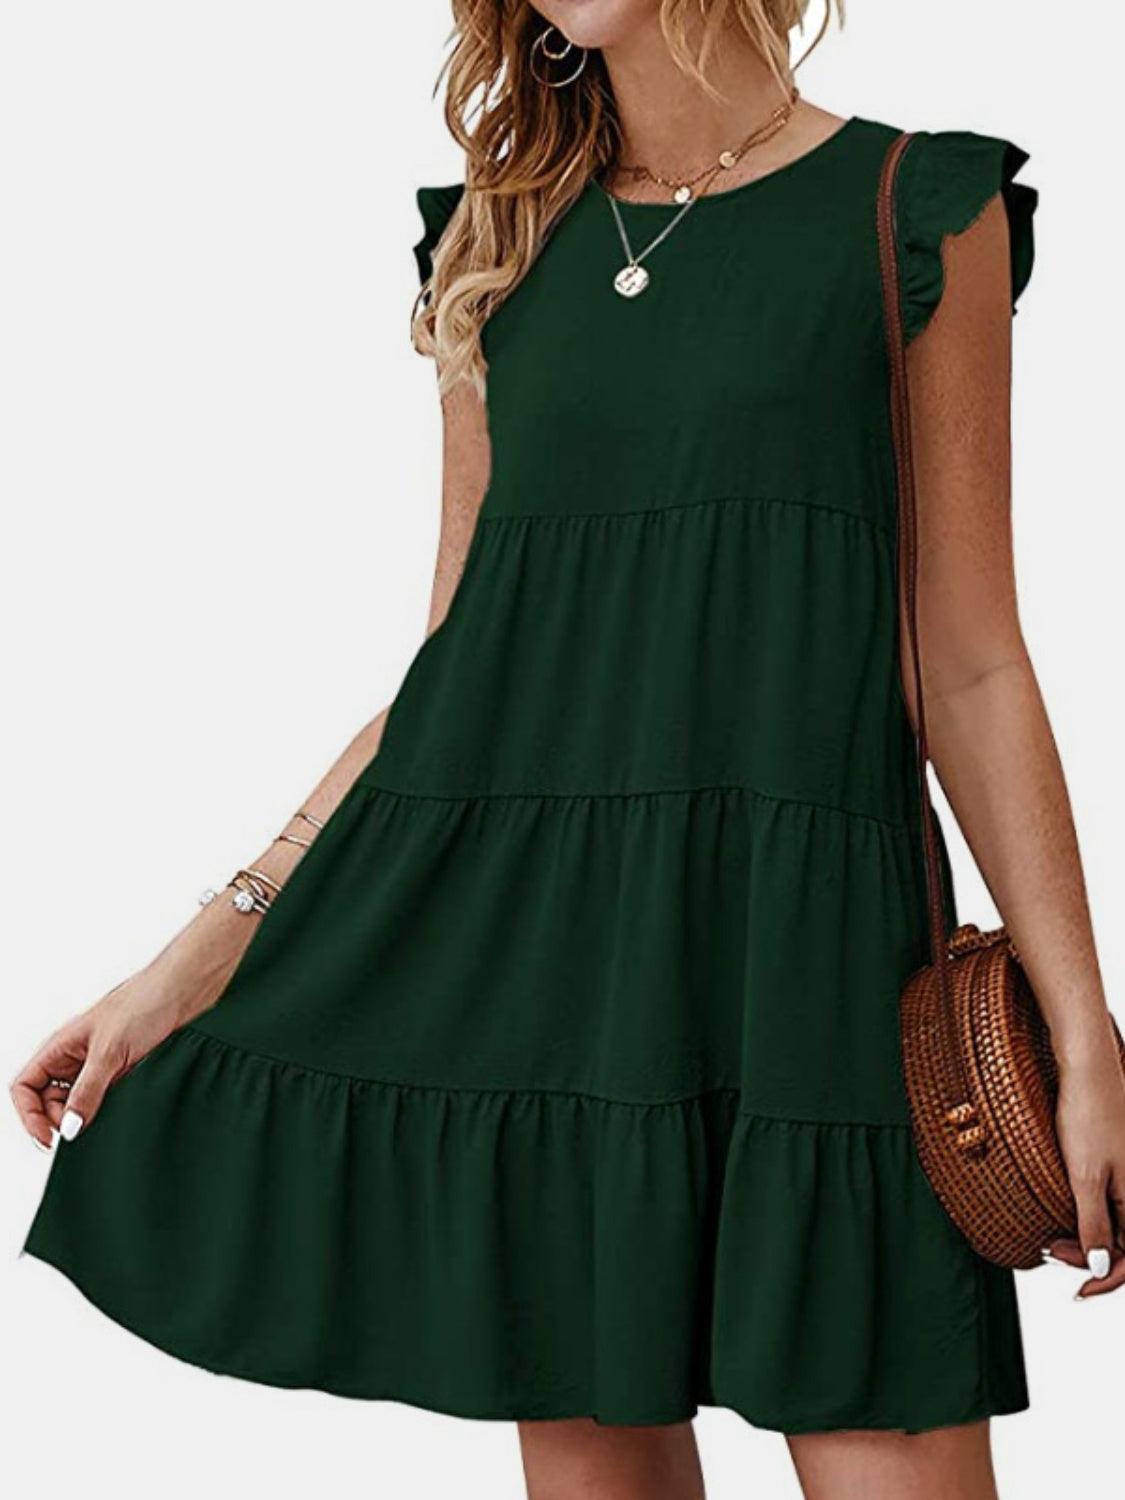 a woman wearing a green dress